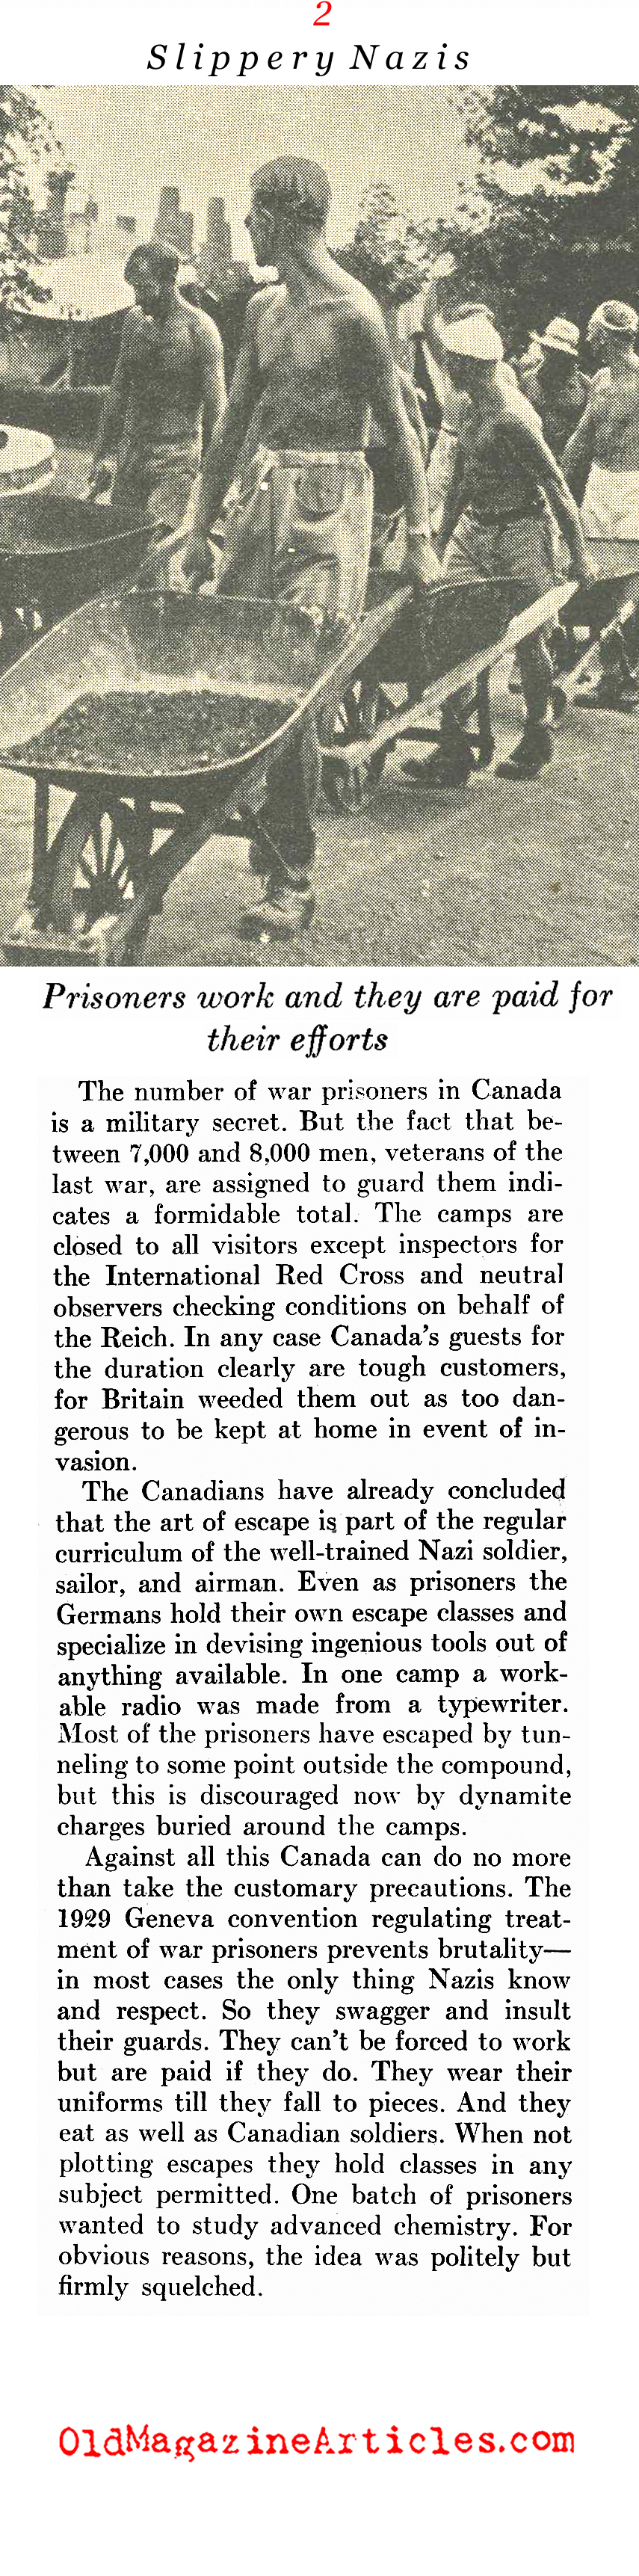 Restless Nazis in Canada (Newsweek Magazine, 1942)